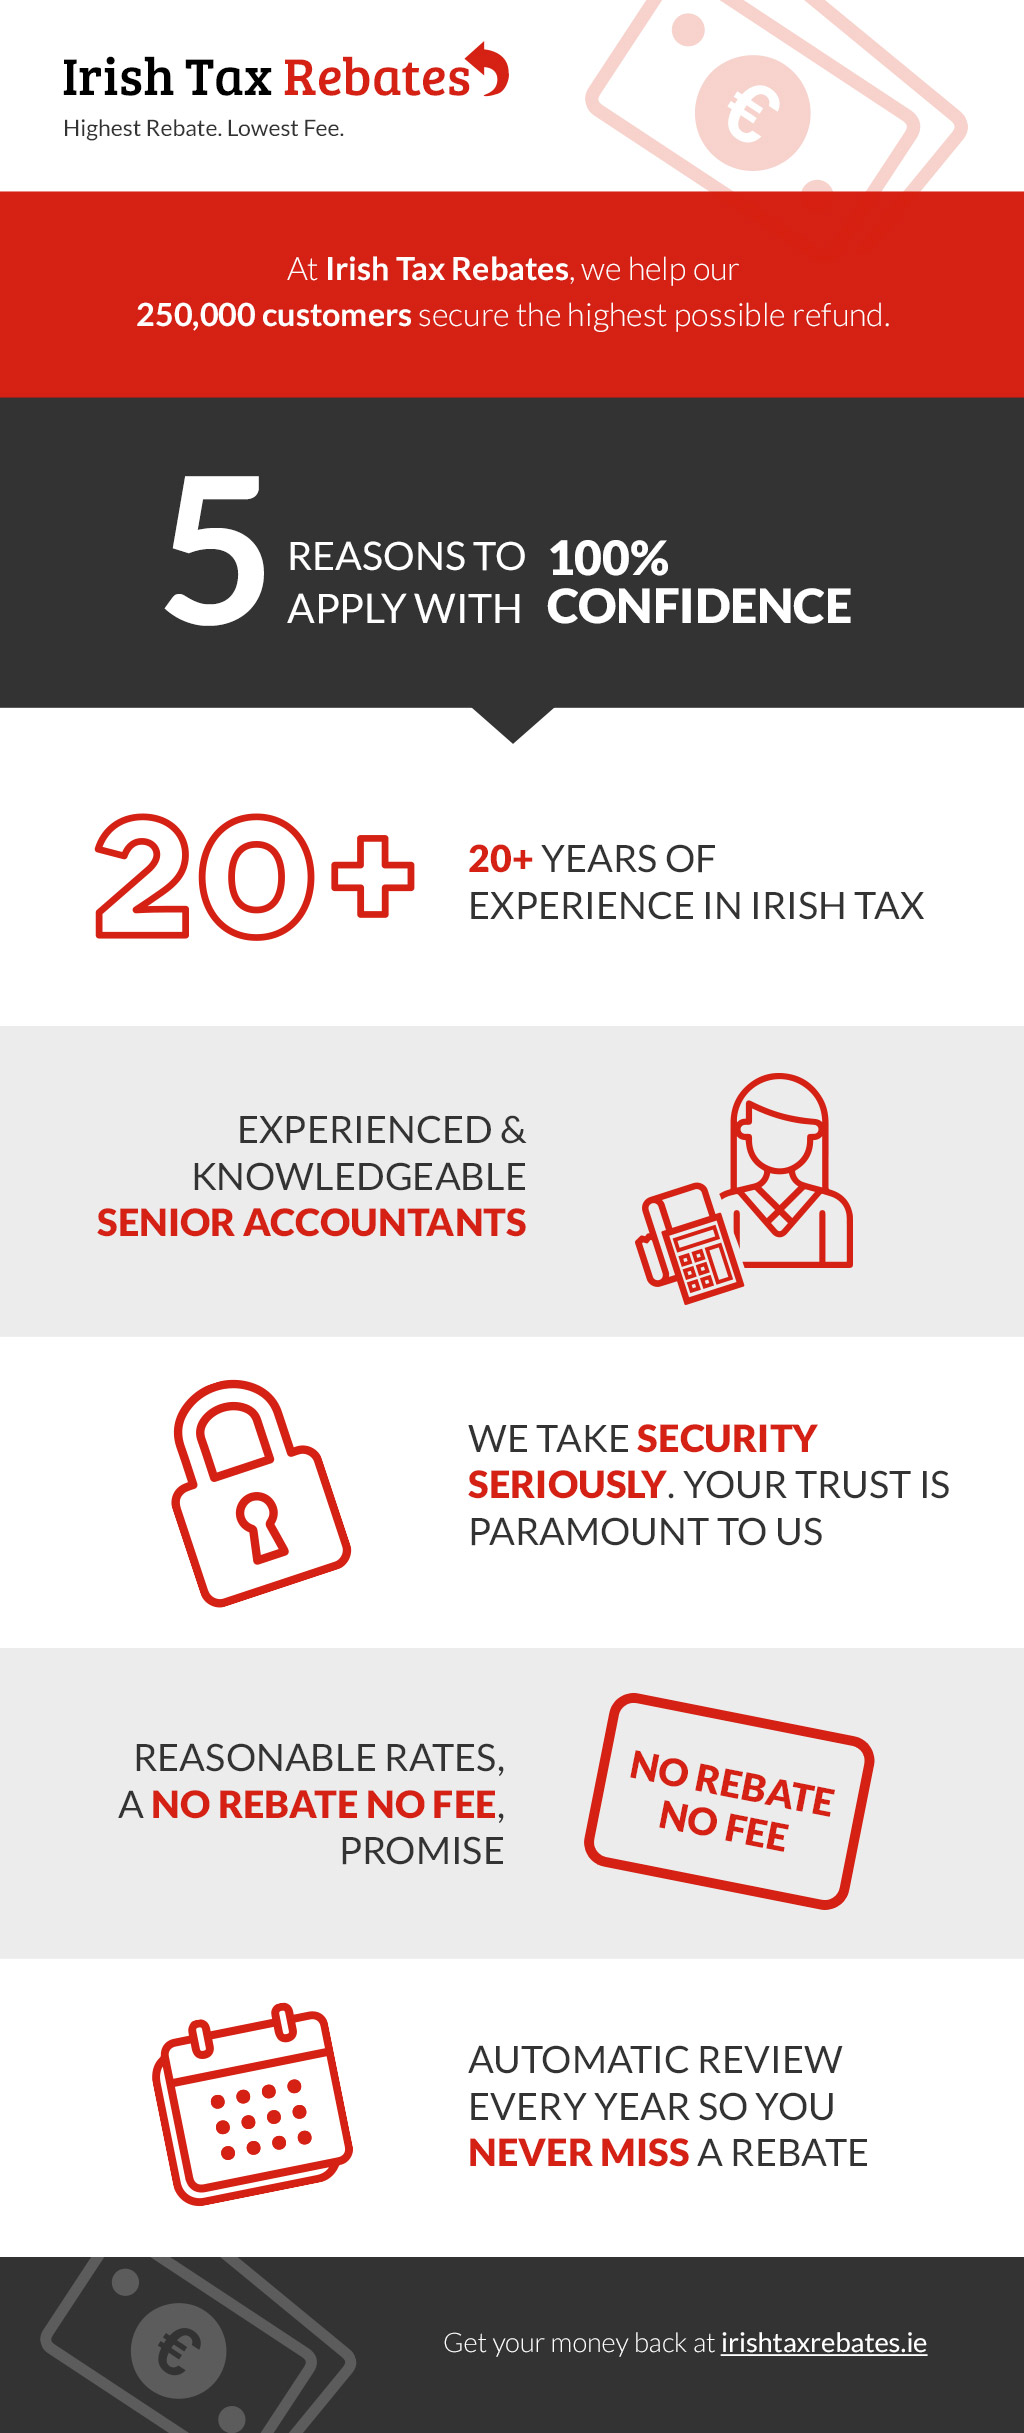 Irish Tax Rebate Reviews